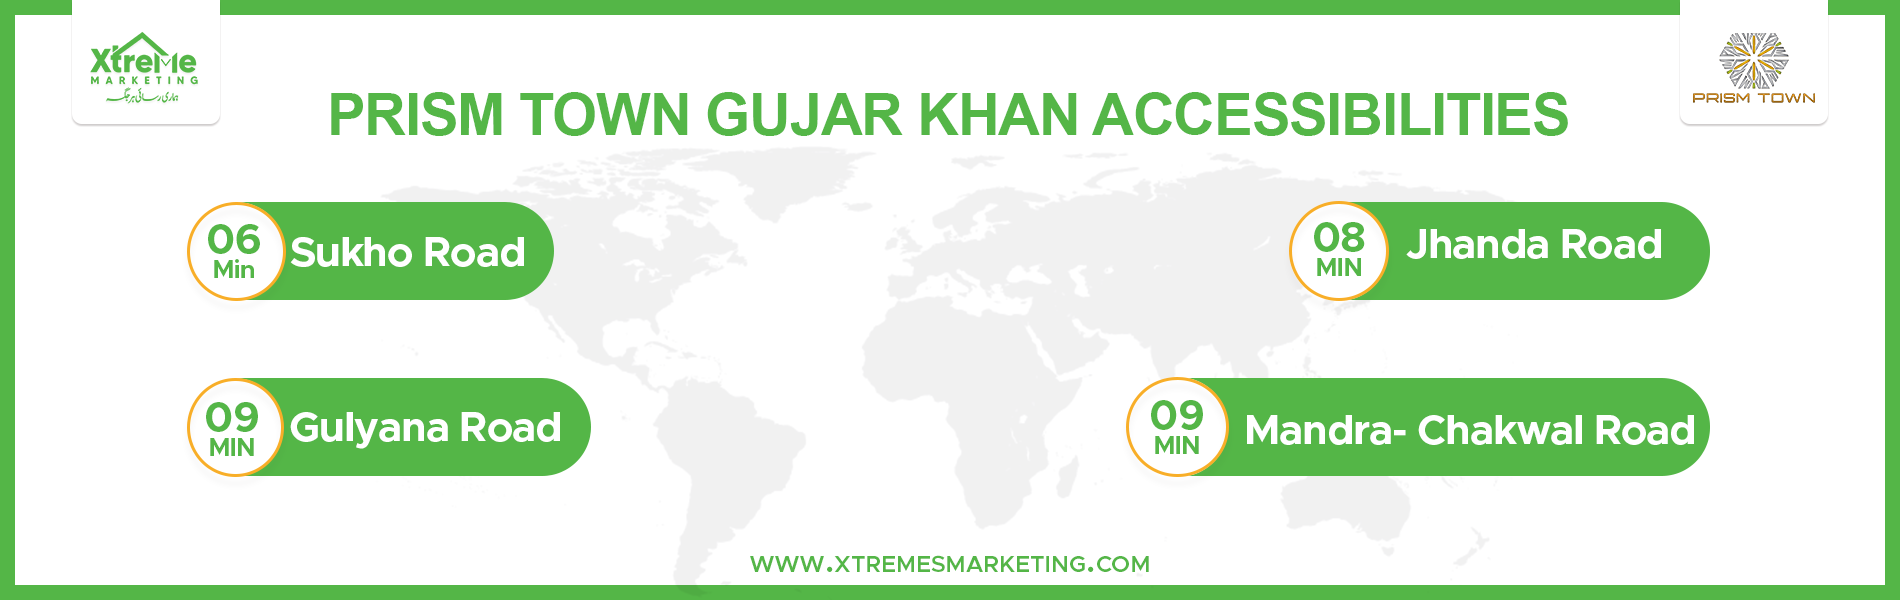 Prism Town Gujjar Khan Accessibilites